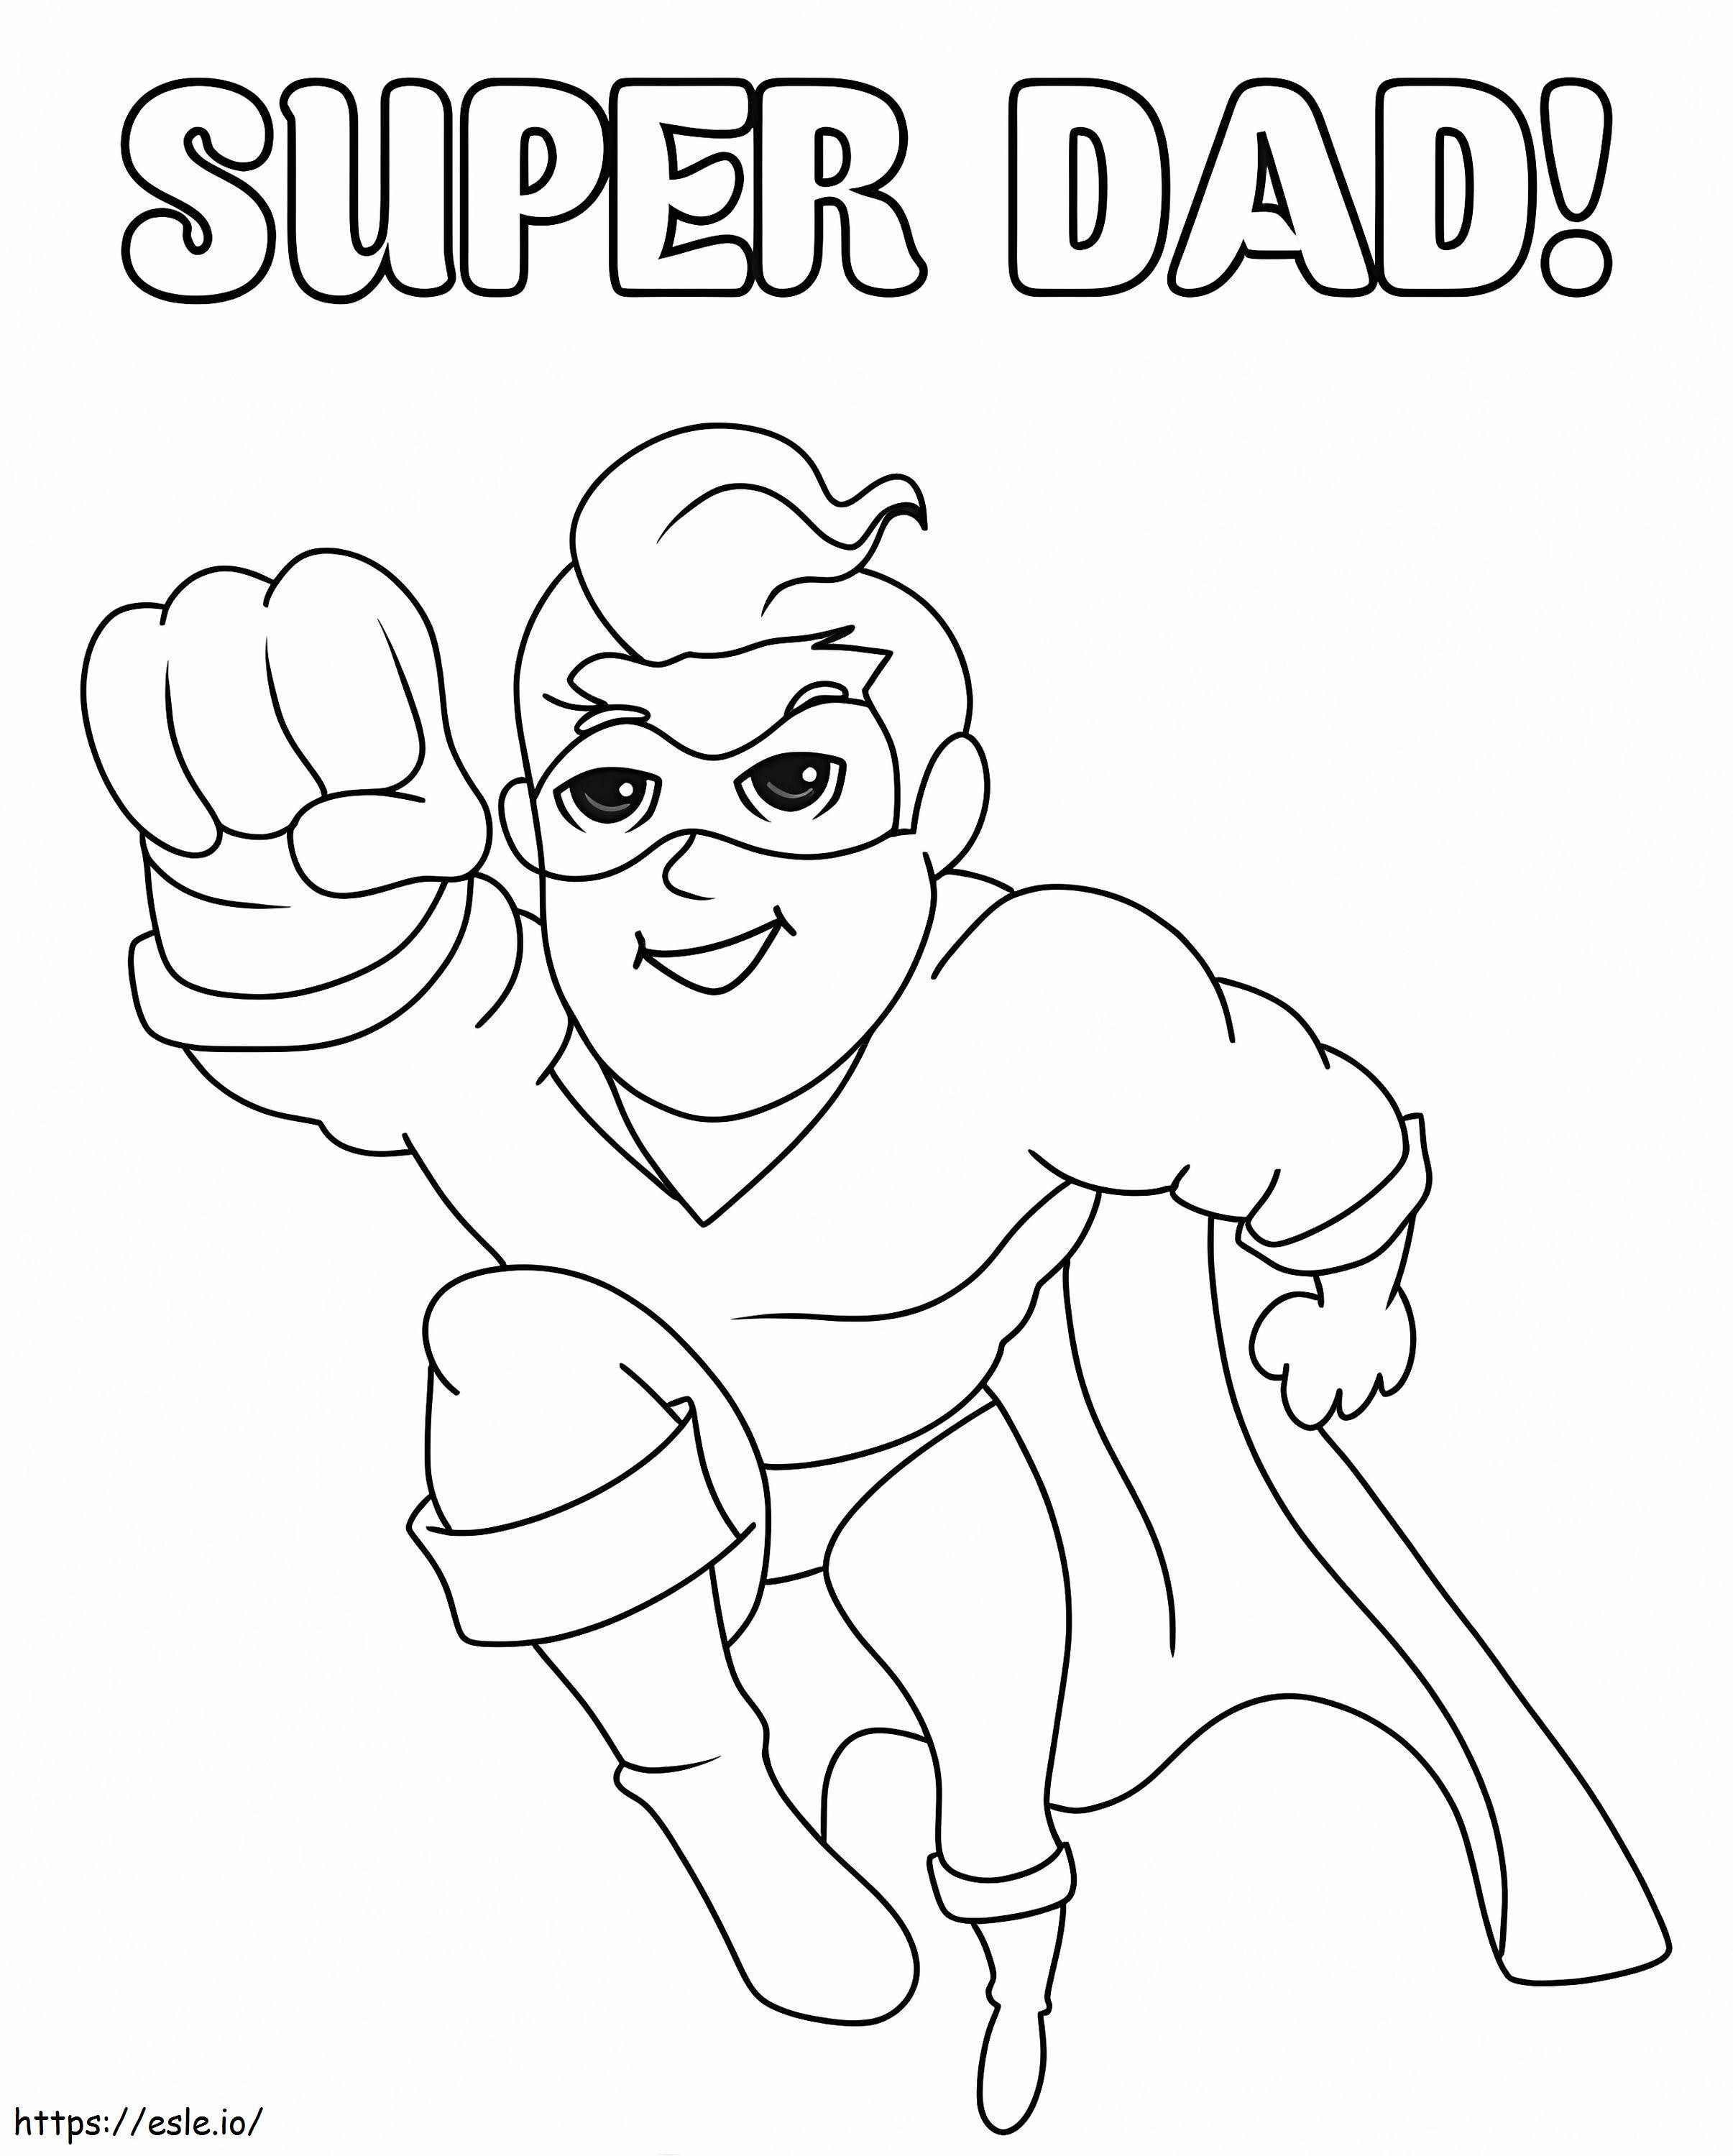 Print Super Dad coloring page